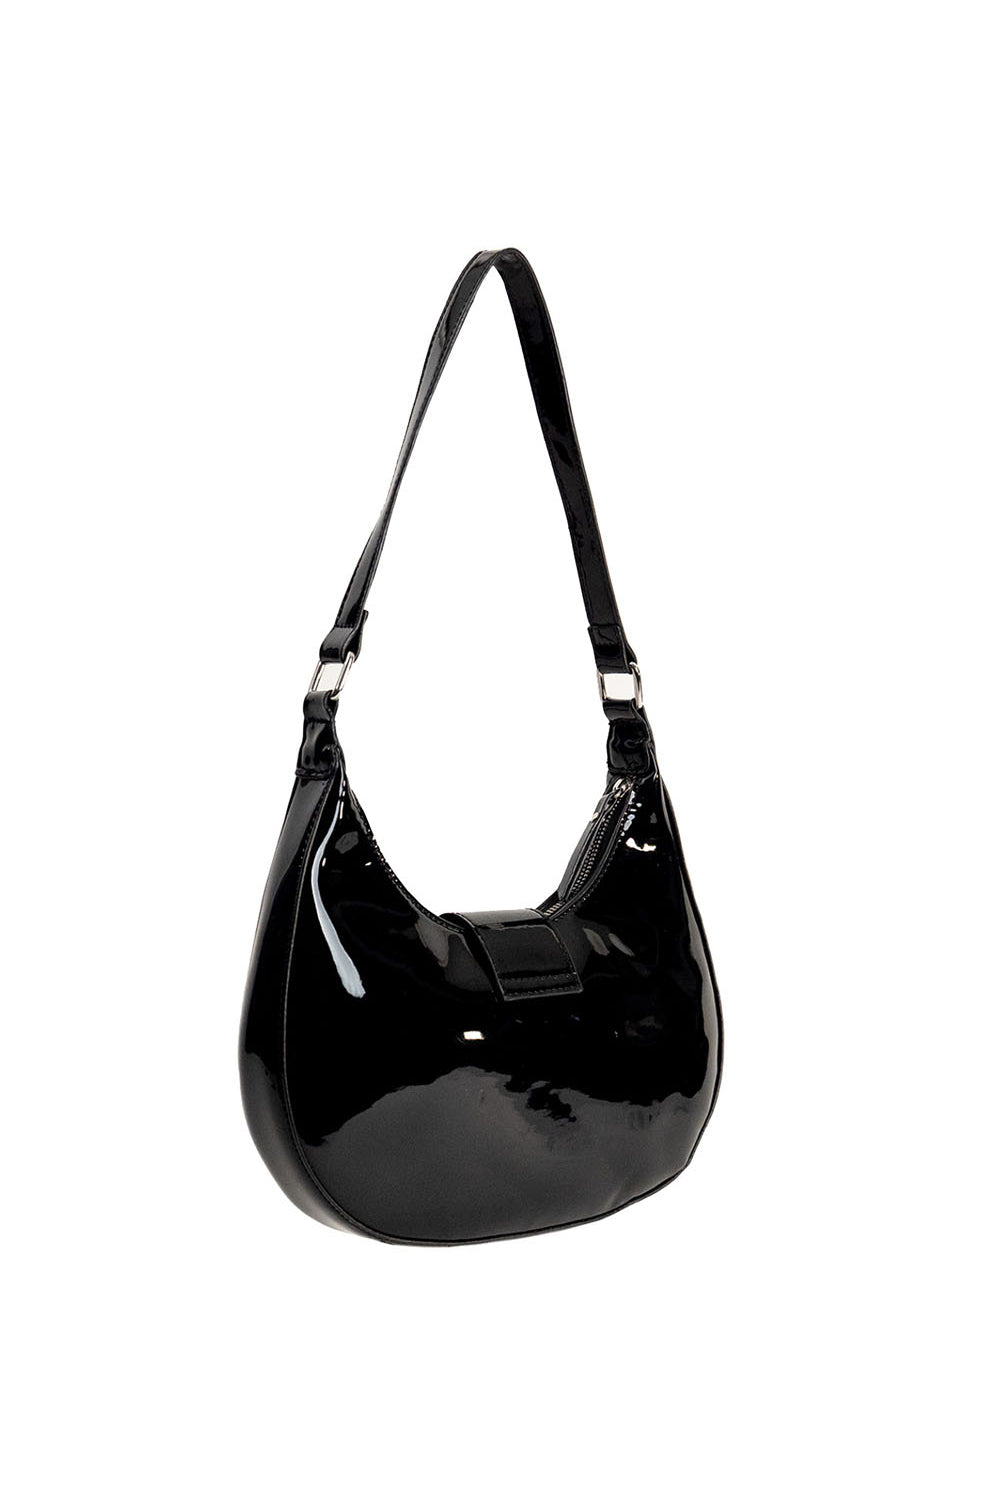 My Accessories London bag | Black patent bag | Women's shoulder bag | Party Season | Occasion | Cocktails | Going Out | Patent Bag